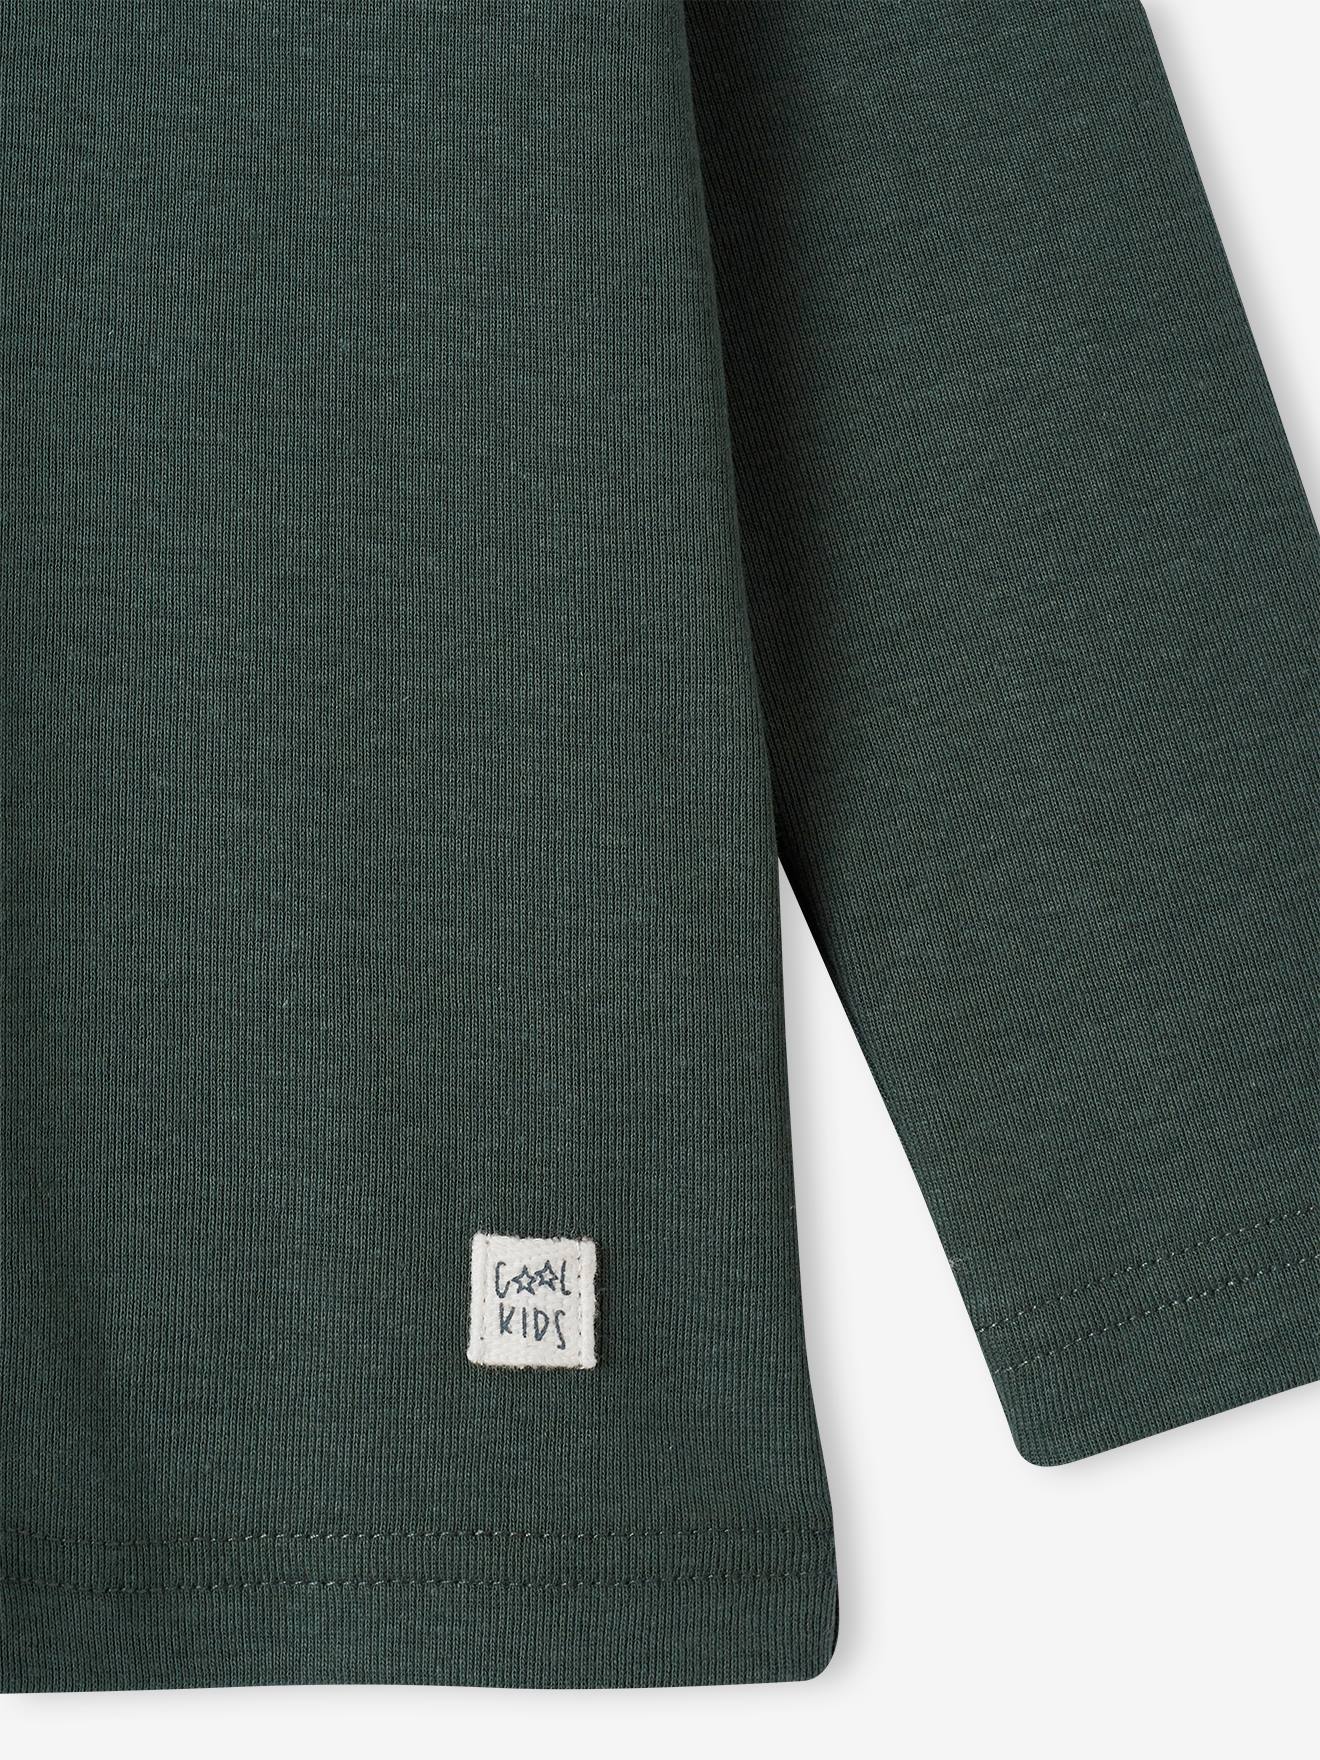 Vertbaudet Printed Sweatshirt-Style Top for Boys Ochre